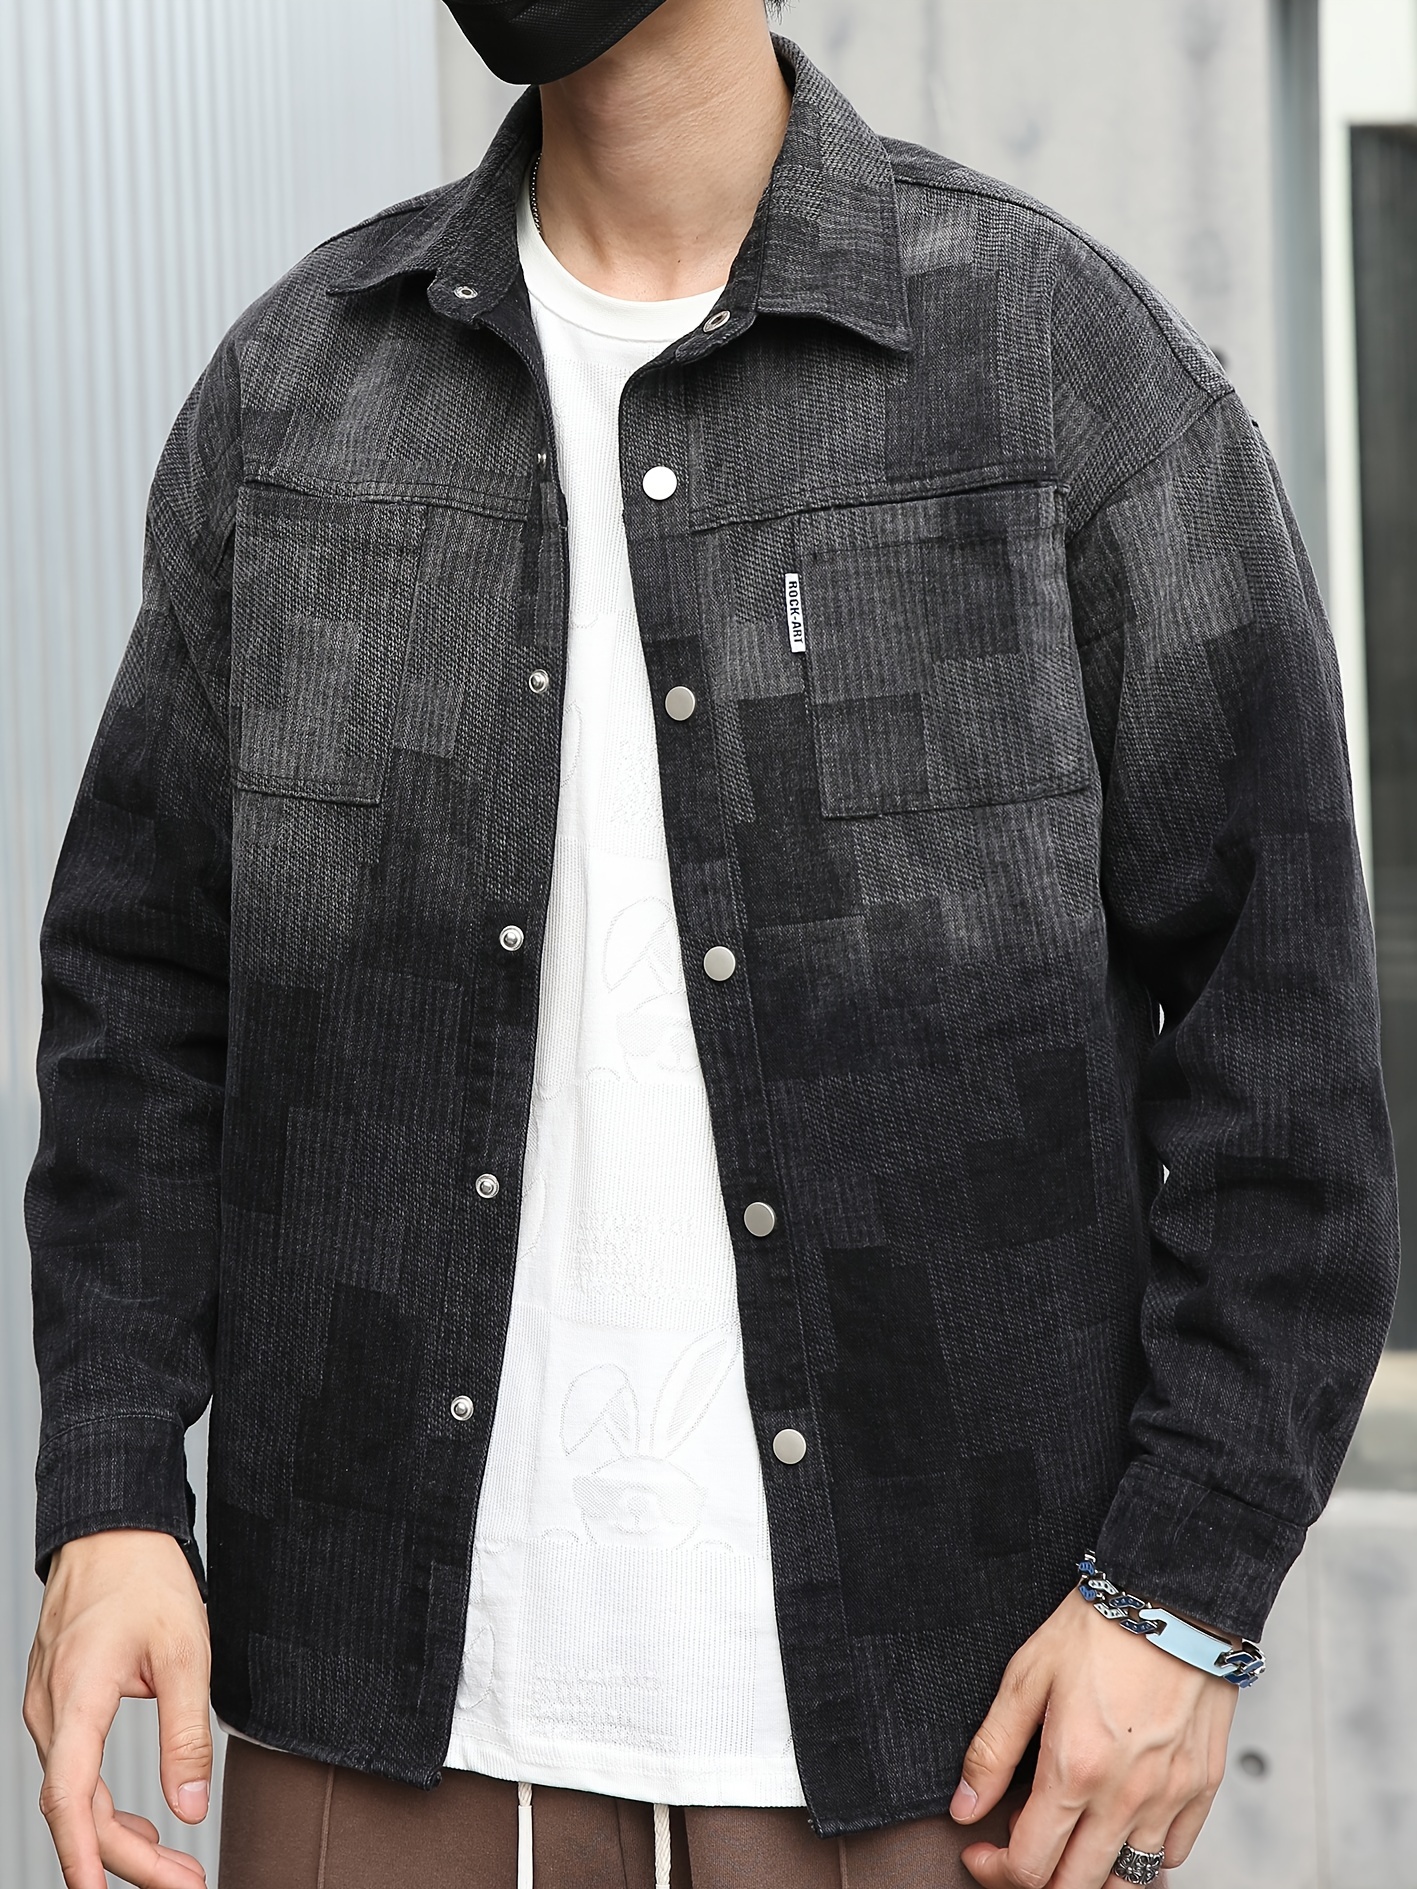 Men's Casual Printed Denim Jacket, Street Style Button Up Shirt Jacket